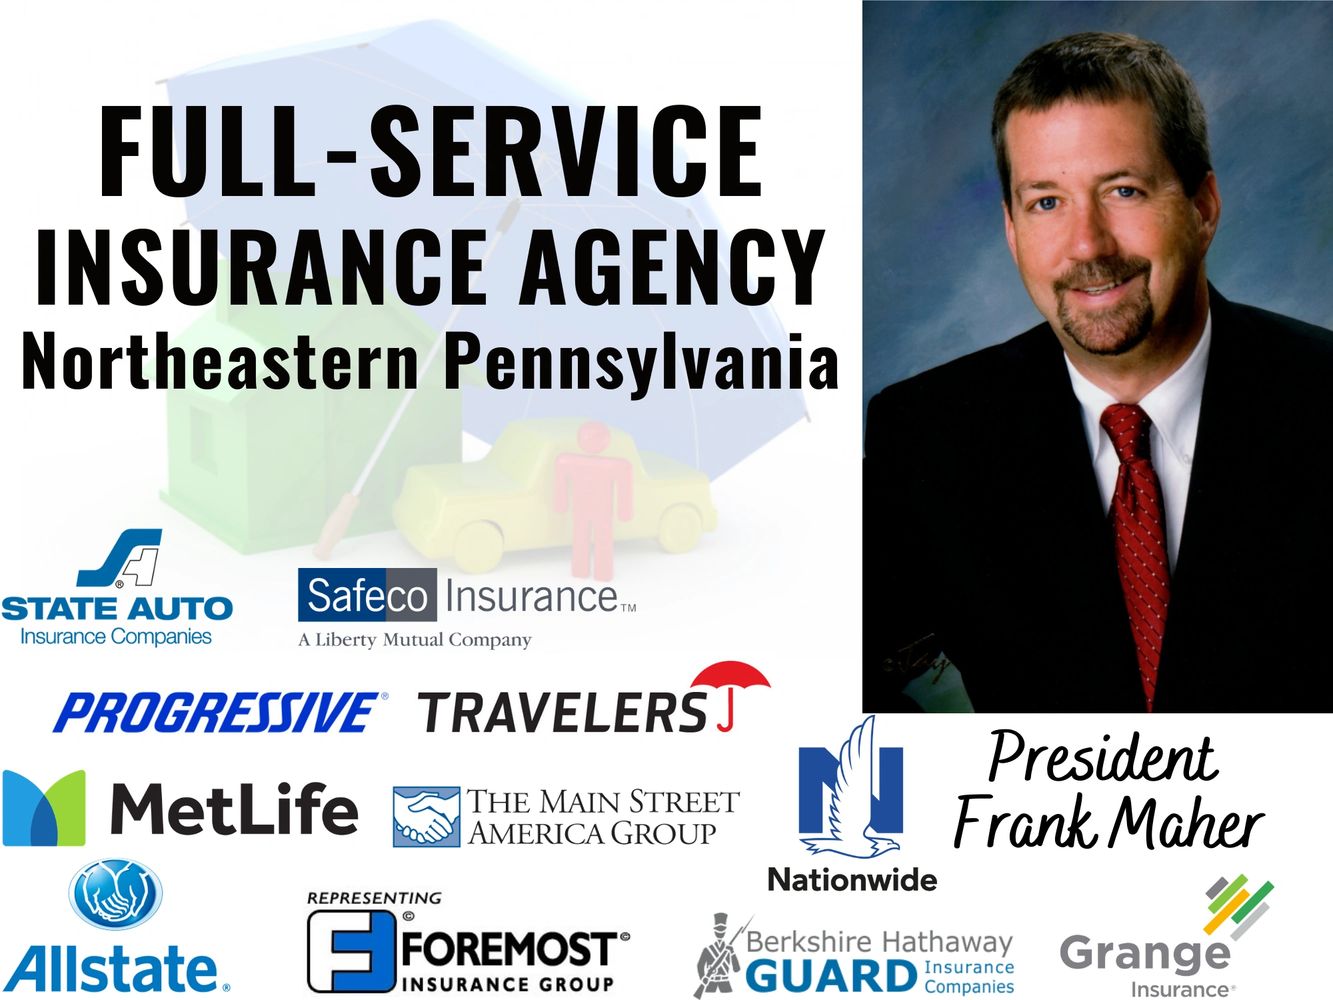 Frank Insurance, Inc President
Full Service Insurance Agency Northeastern PA